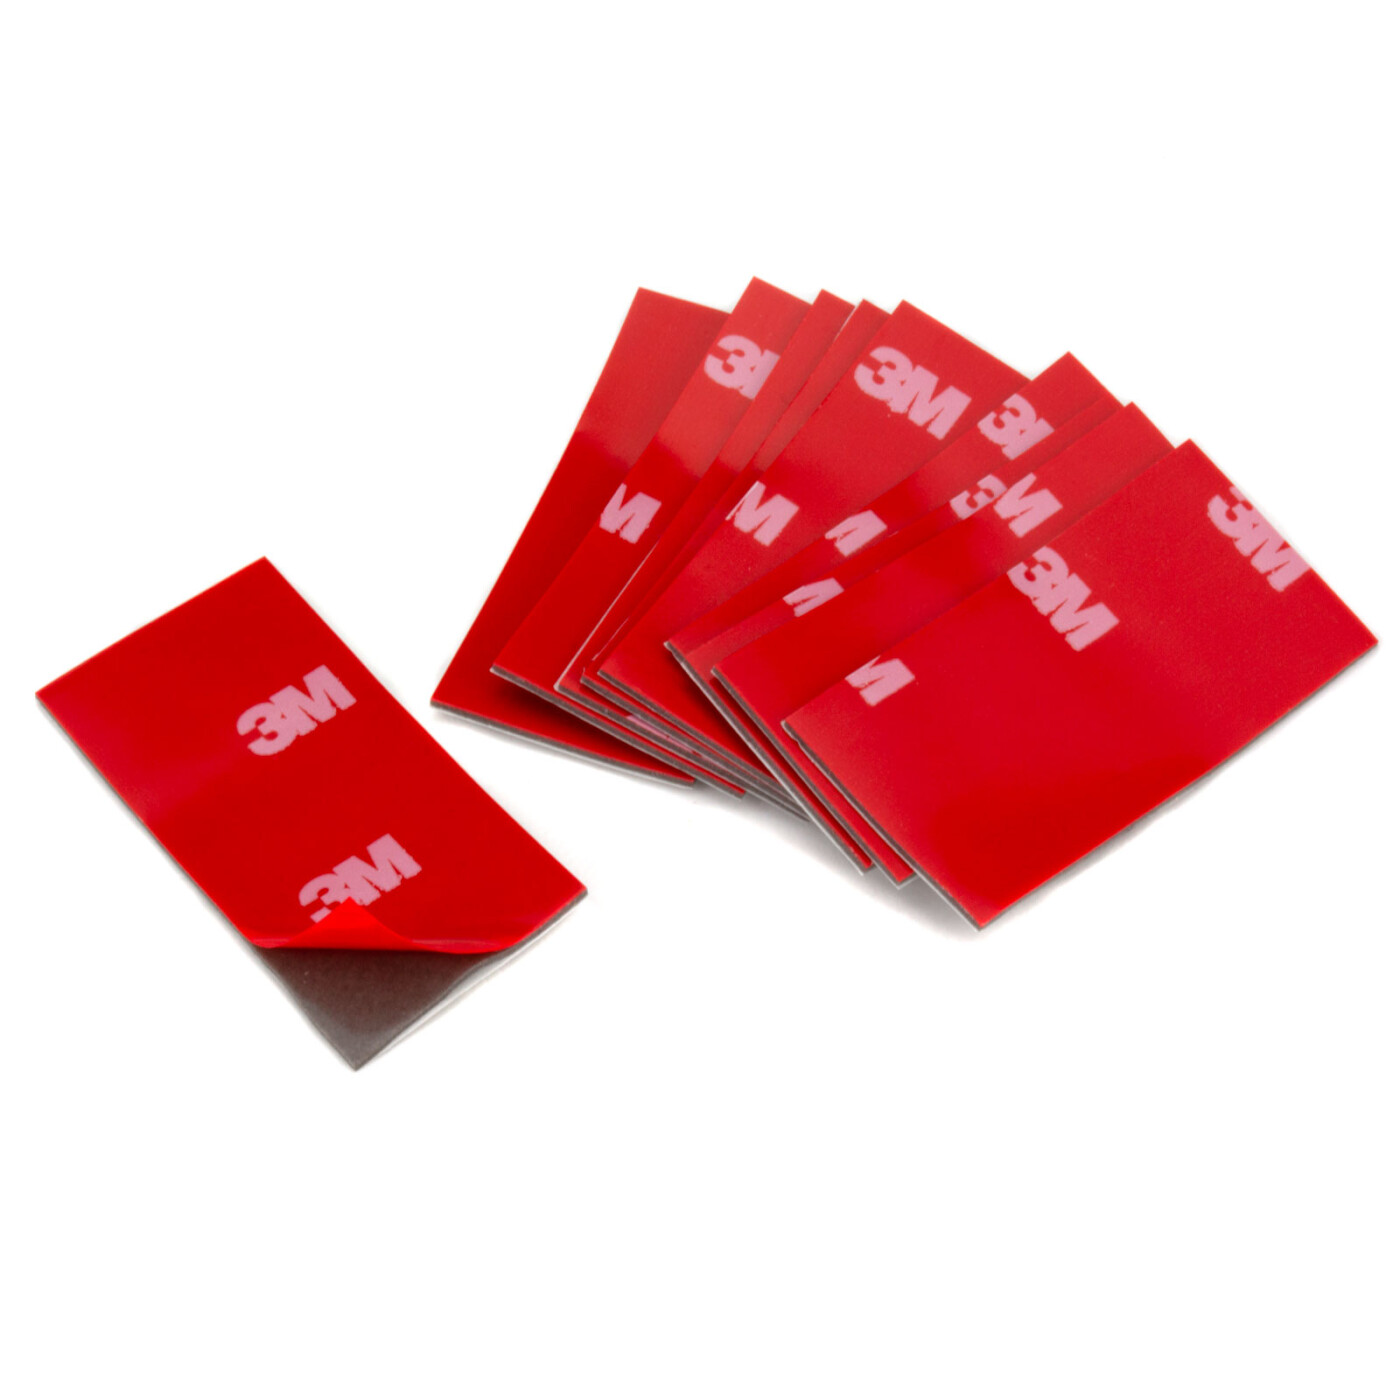 Buy 3M 4229P adhesive pads 50x25mm online